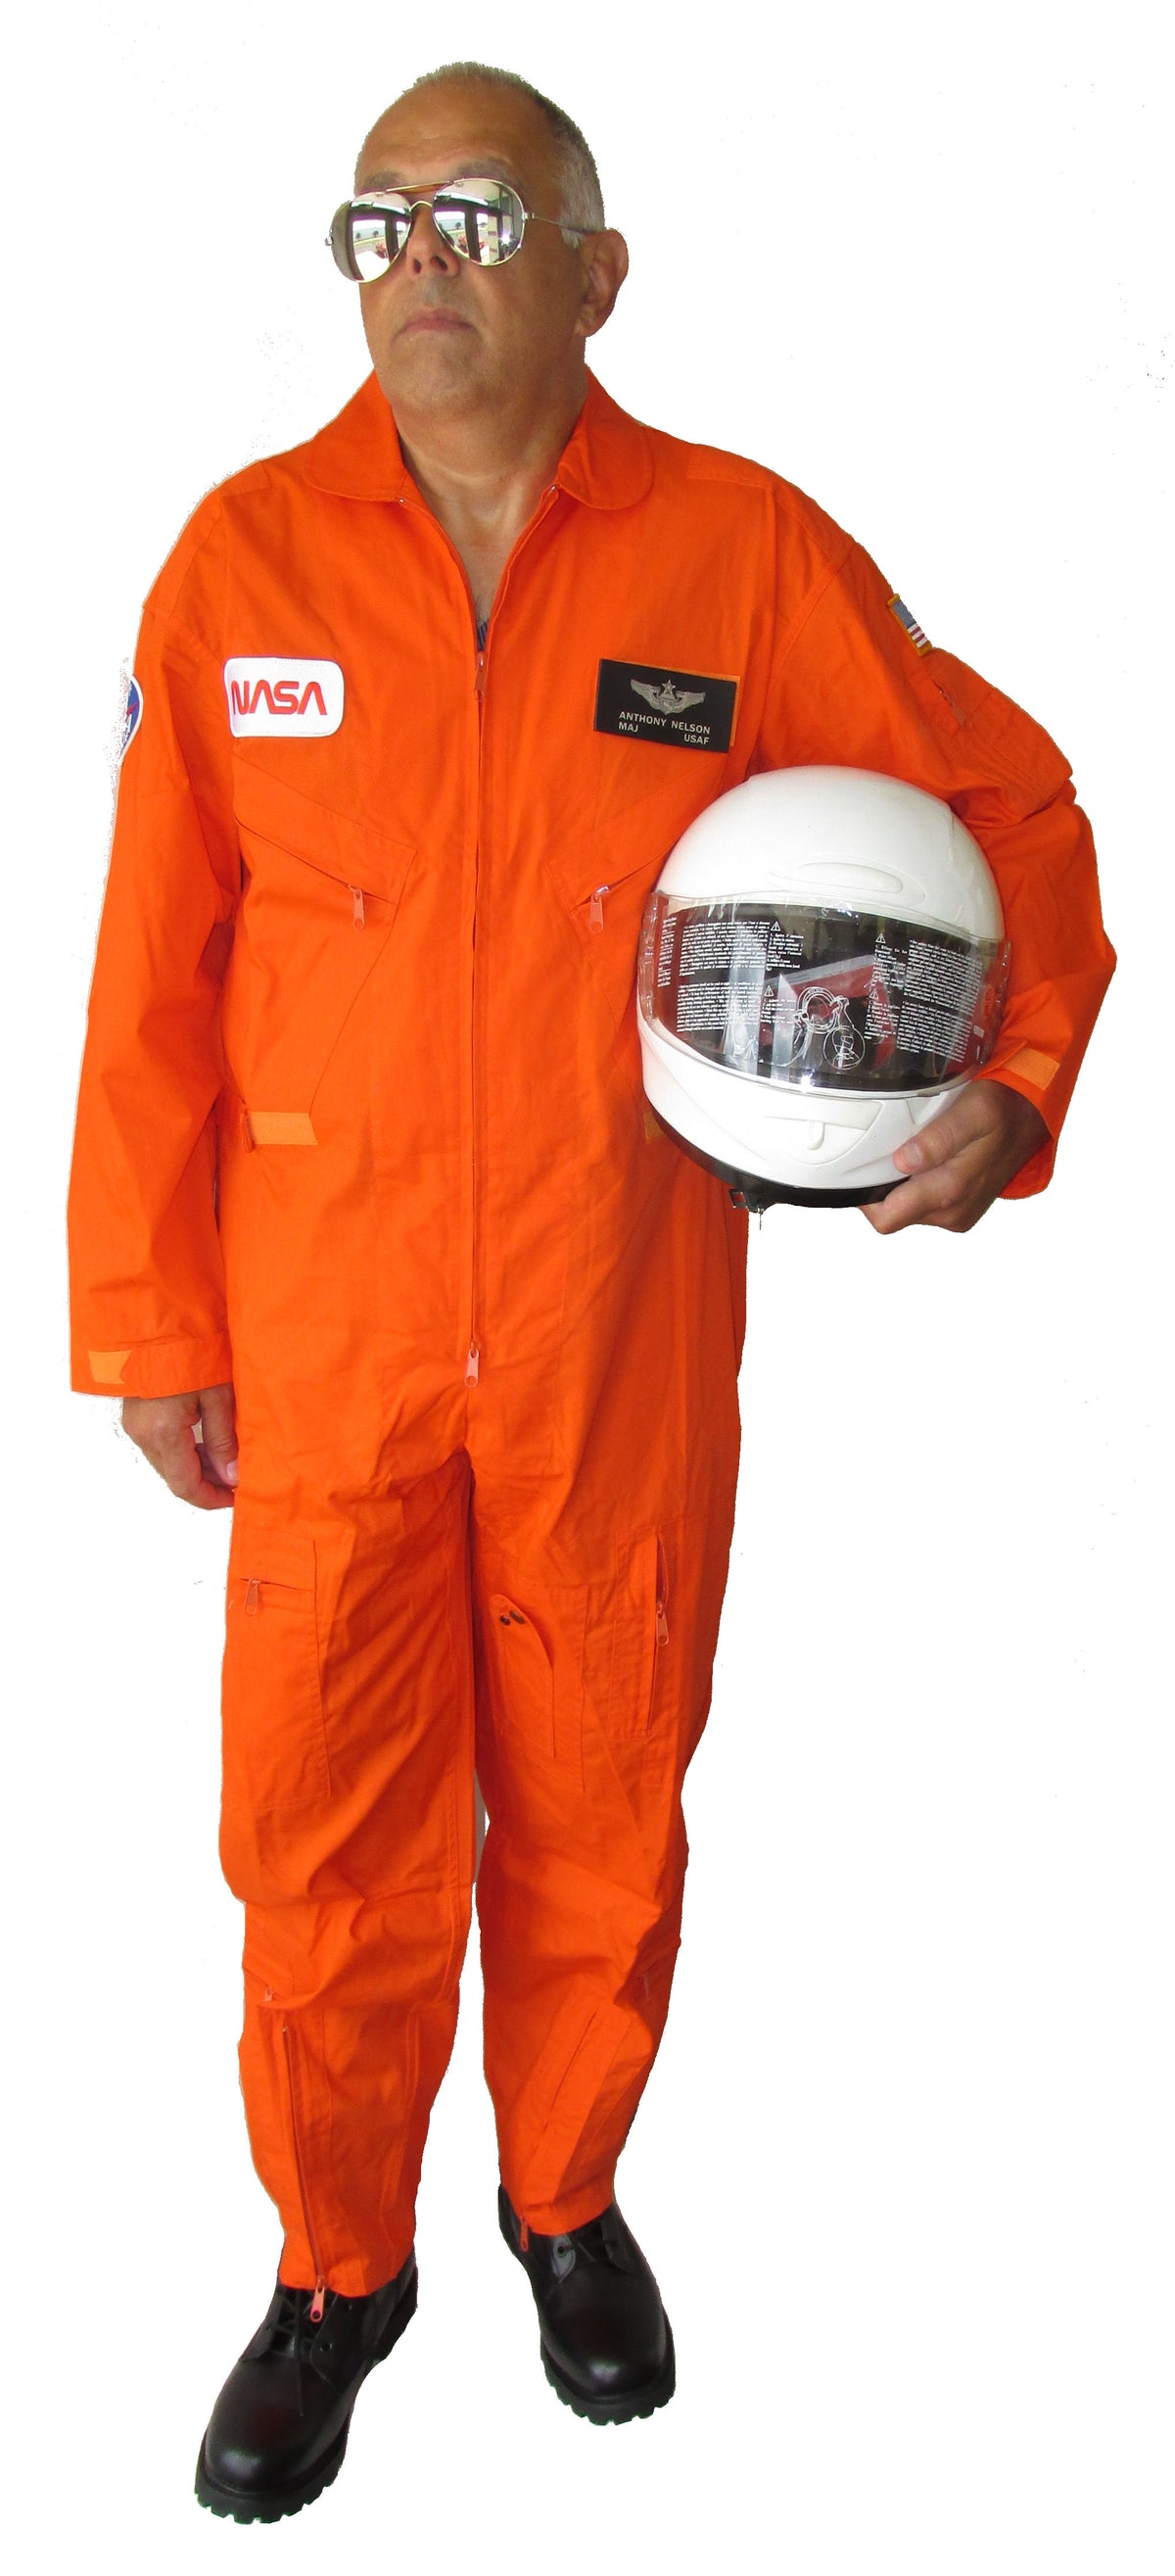 USAF - NASA Astronaut Costume - Major Anthony Nelson